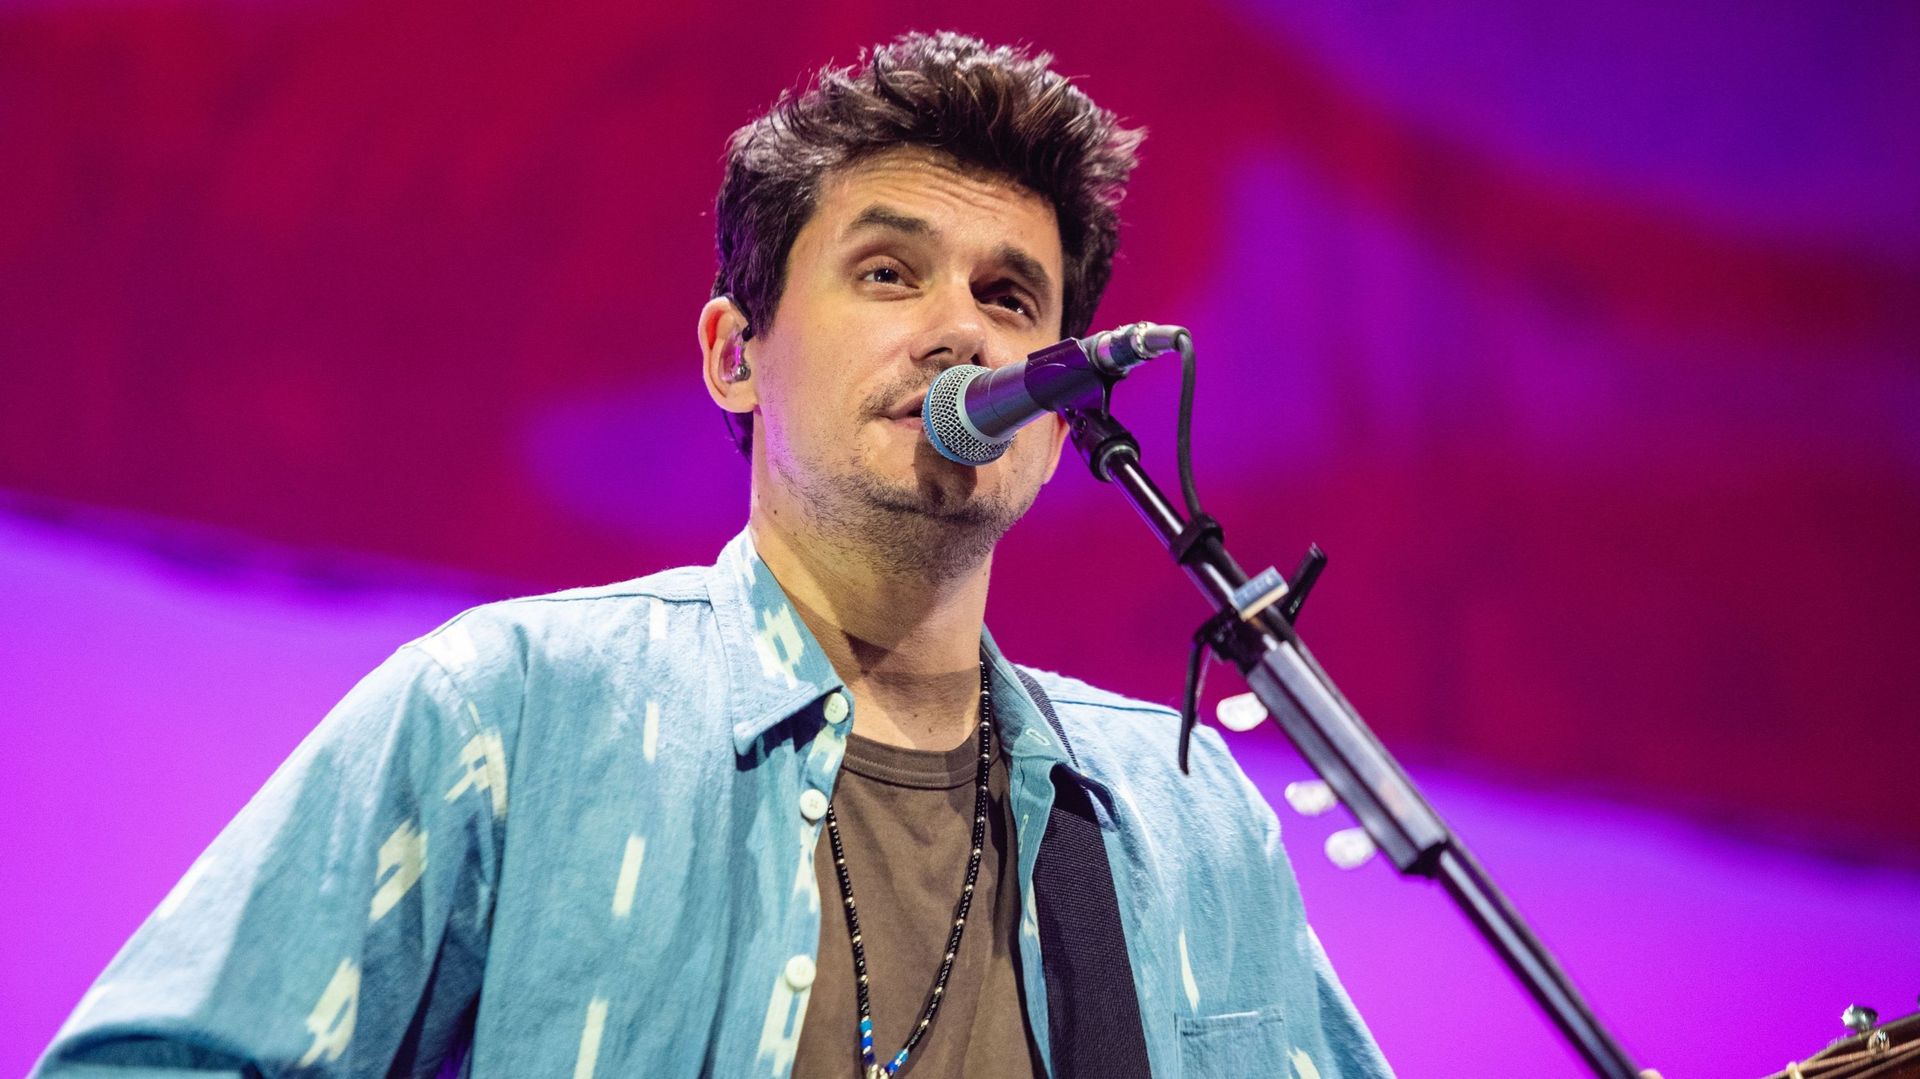 John Mayer Performs At The O2 Arena, London